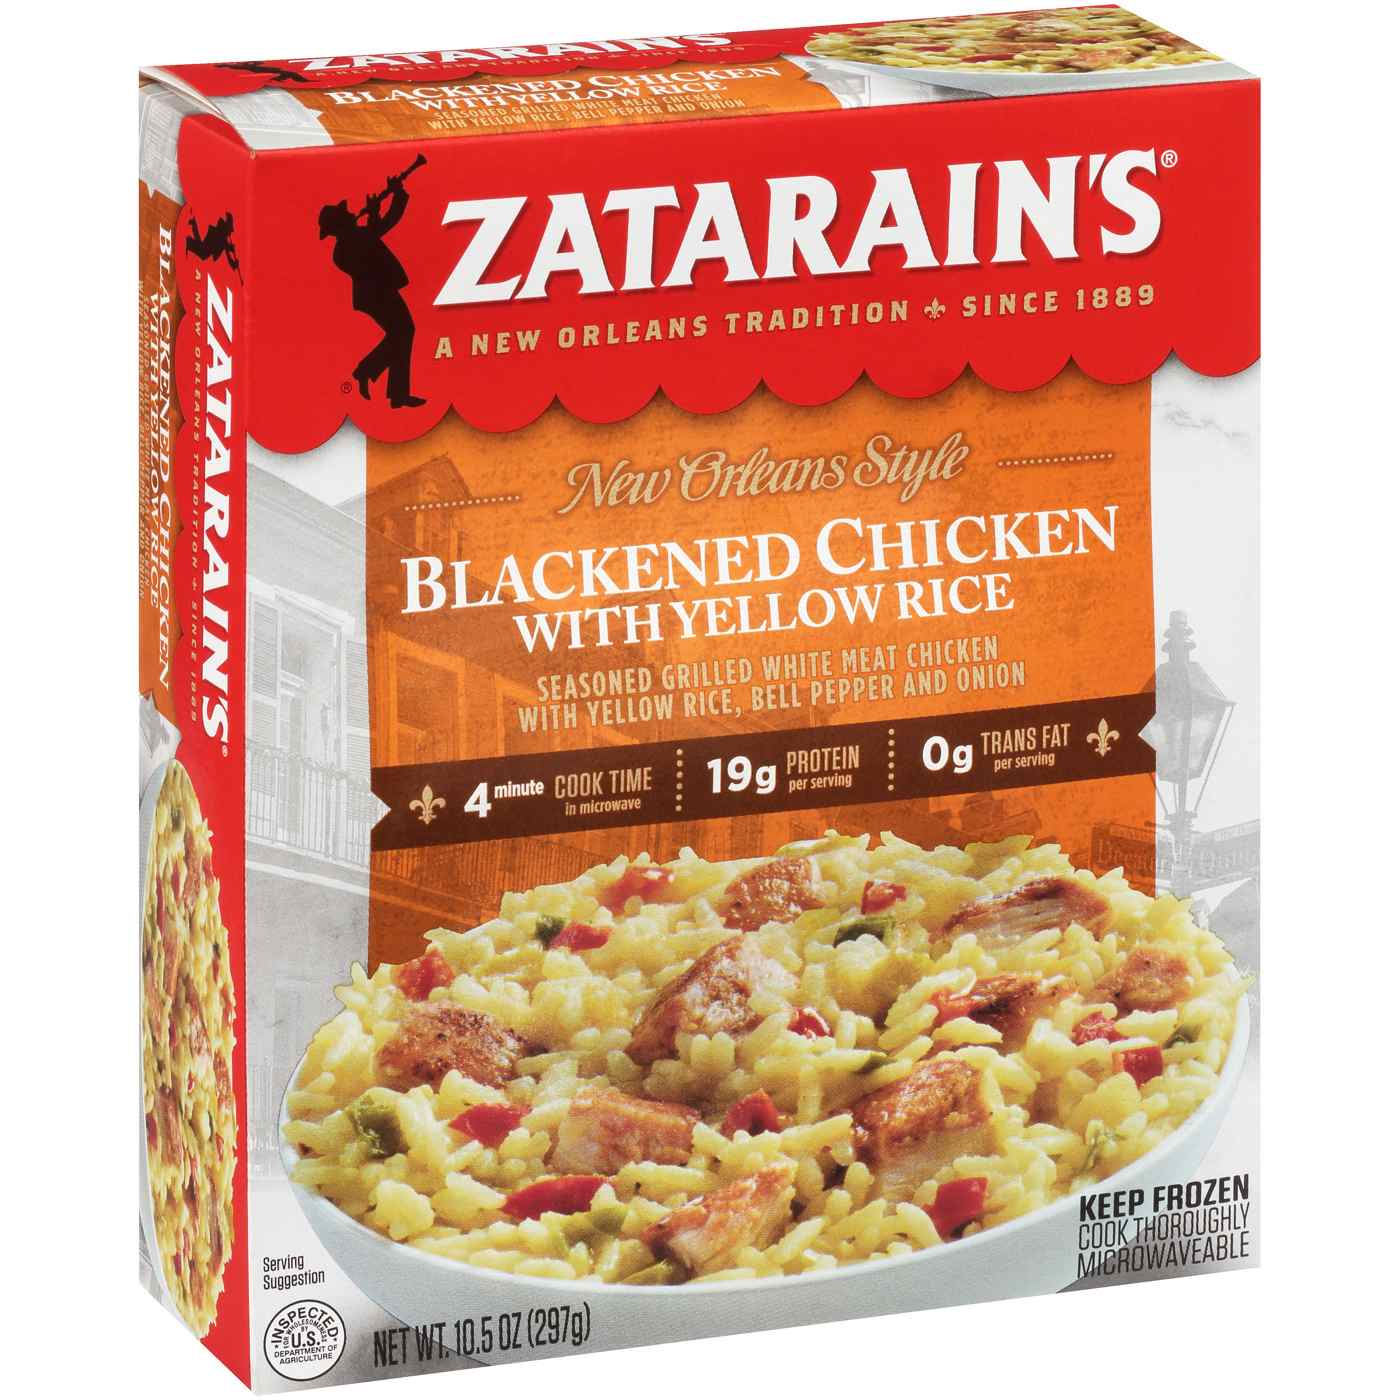 Zatarain's New Orleans-Style Blackened Chicken & Yellow Rice Frozen Meal; image 2 of 2